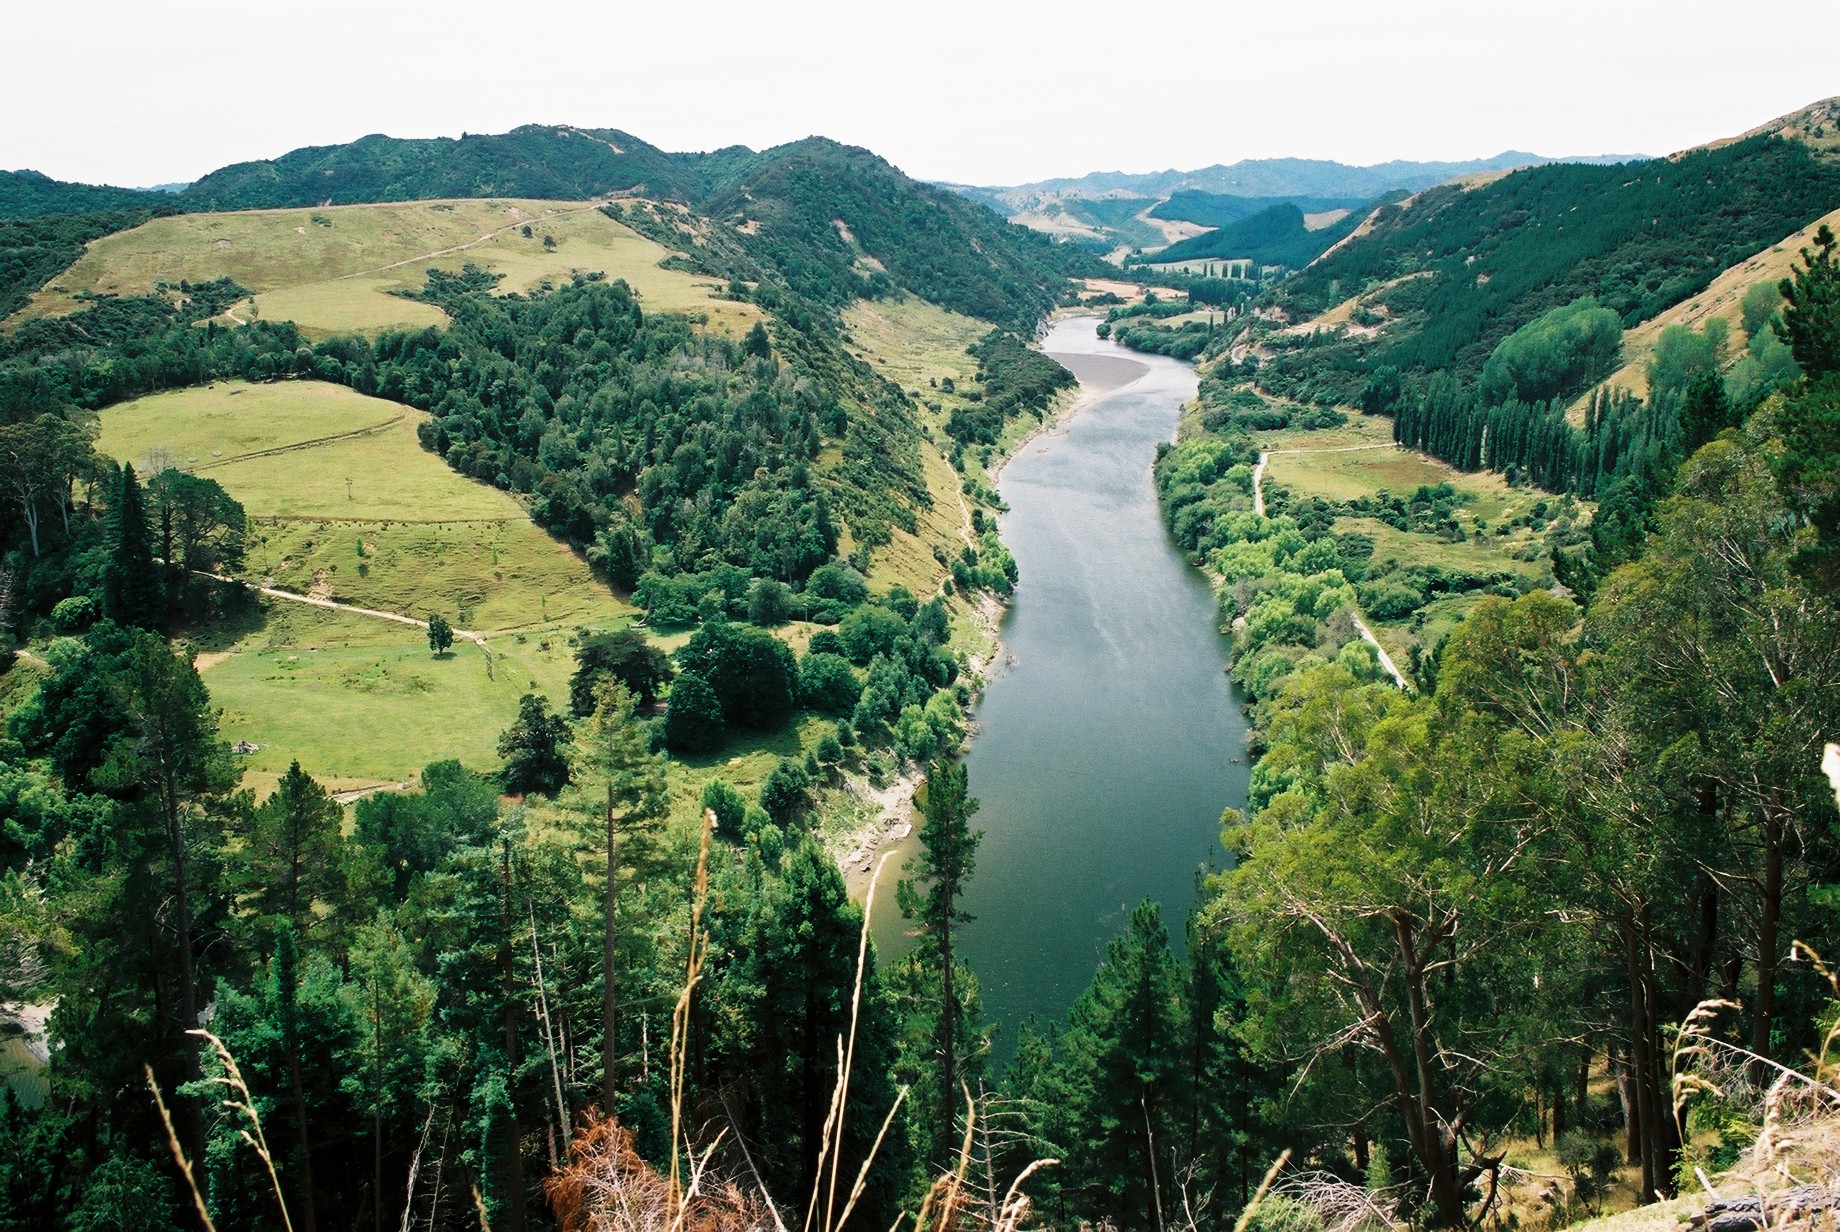 fotka / image Wanganui, color negatives, New Zealand